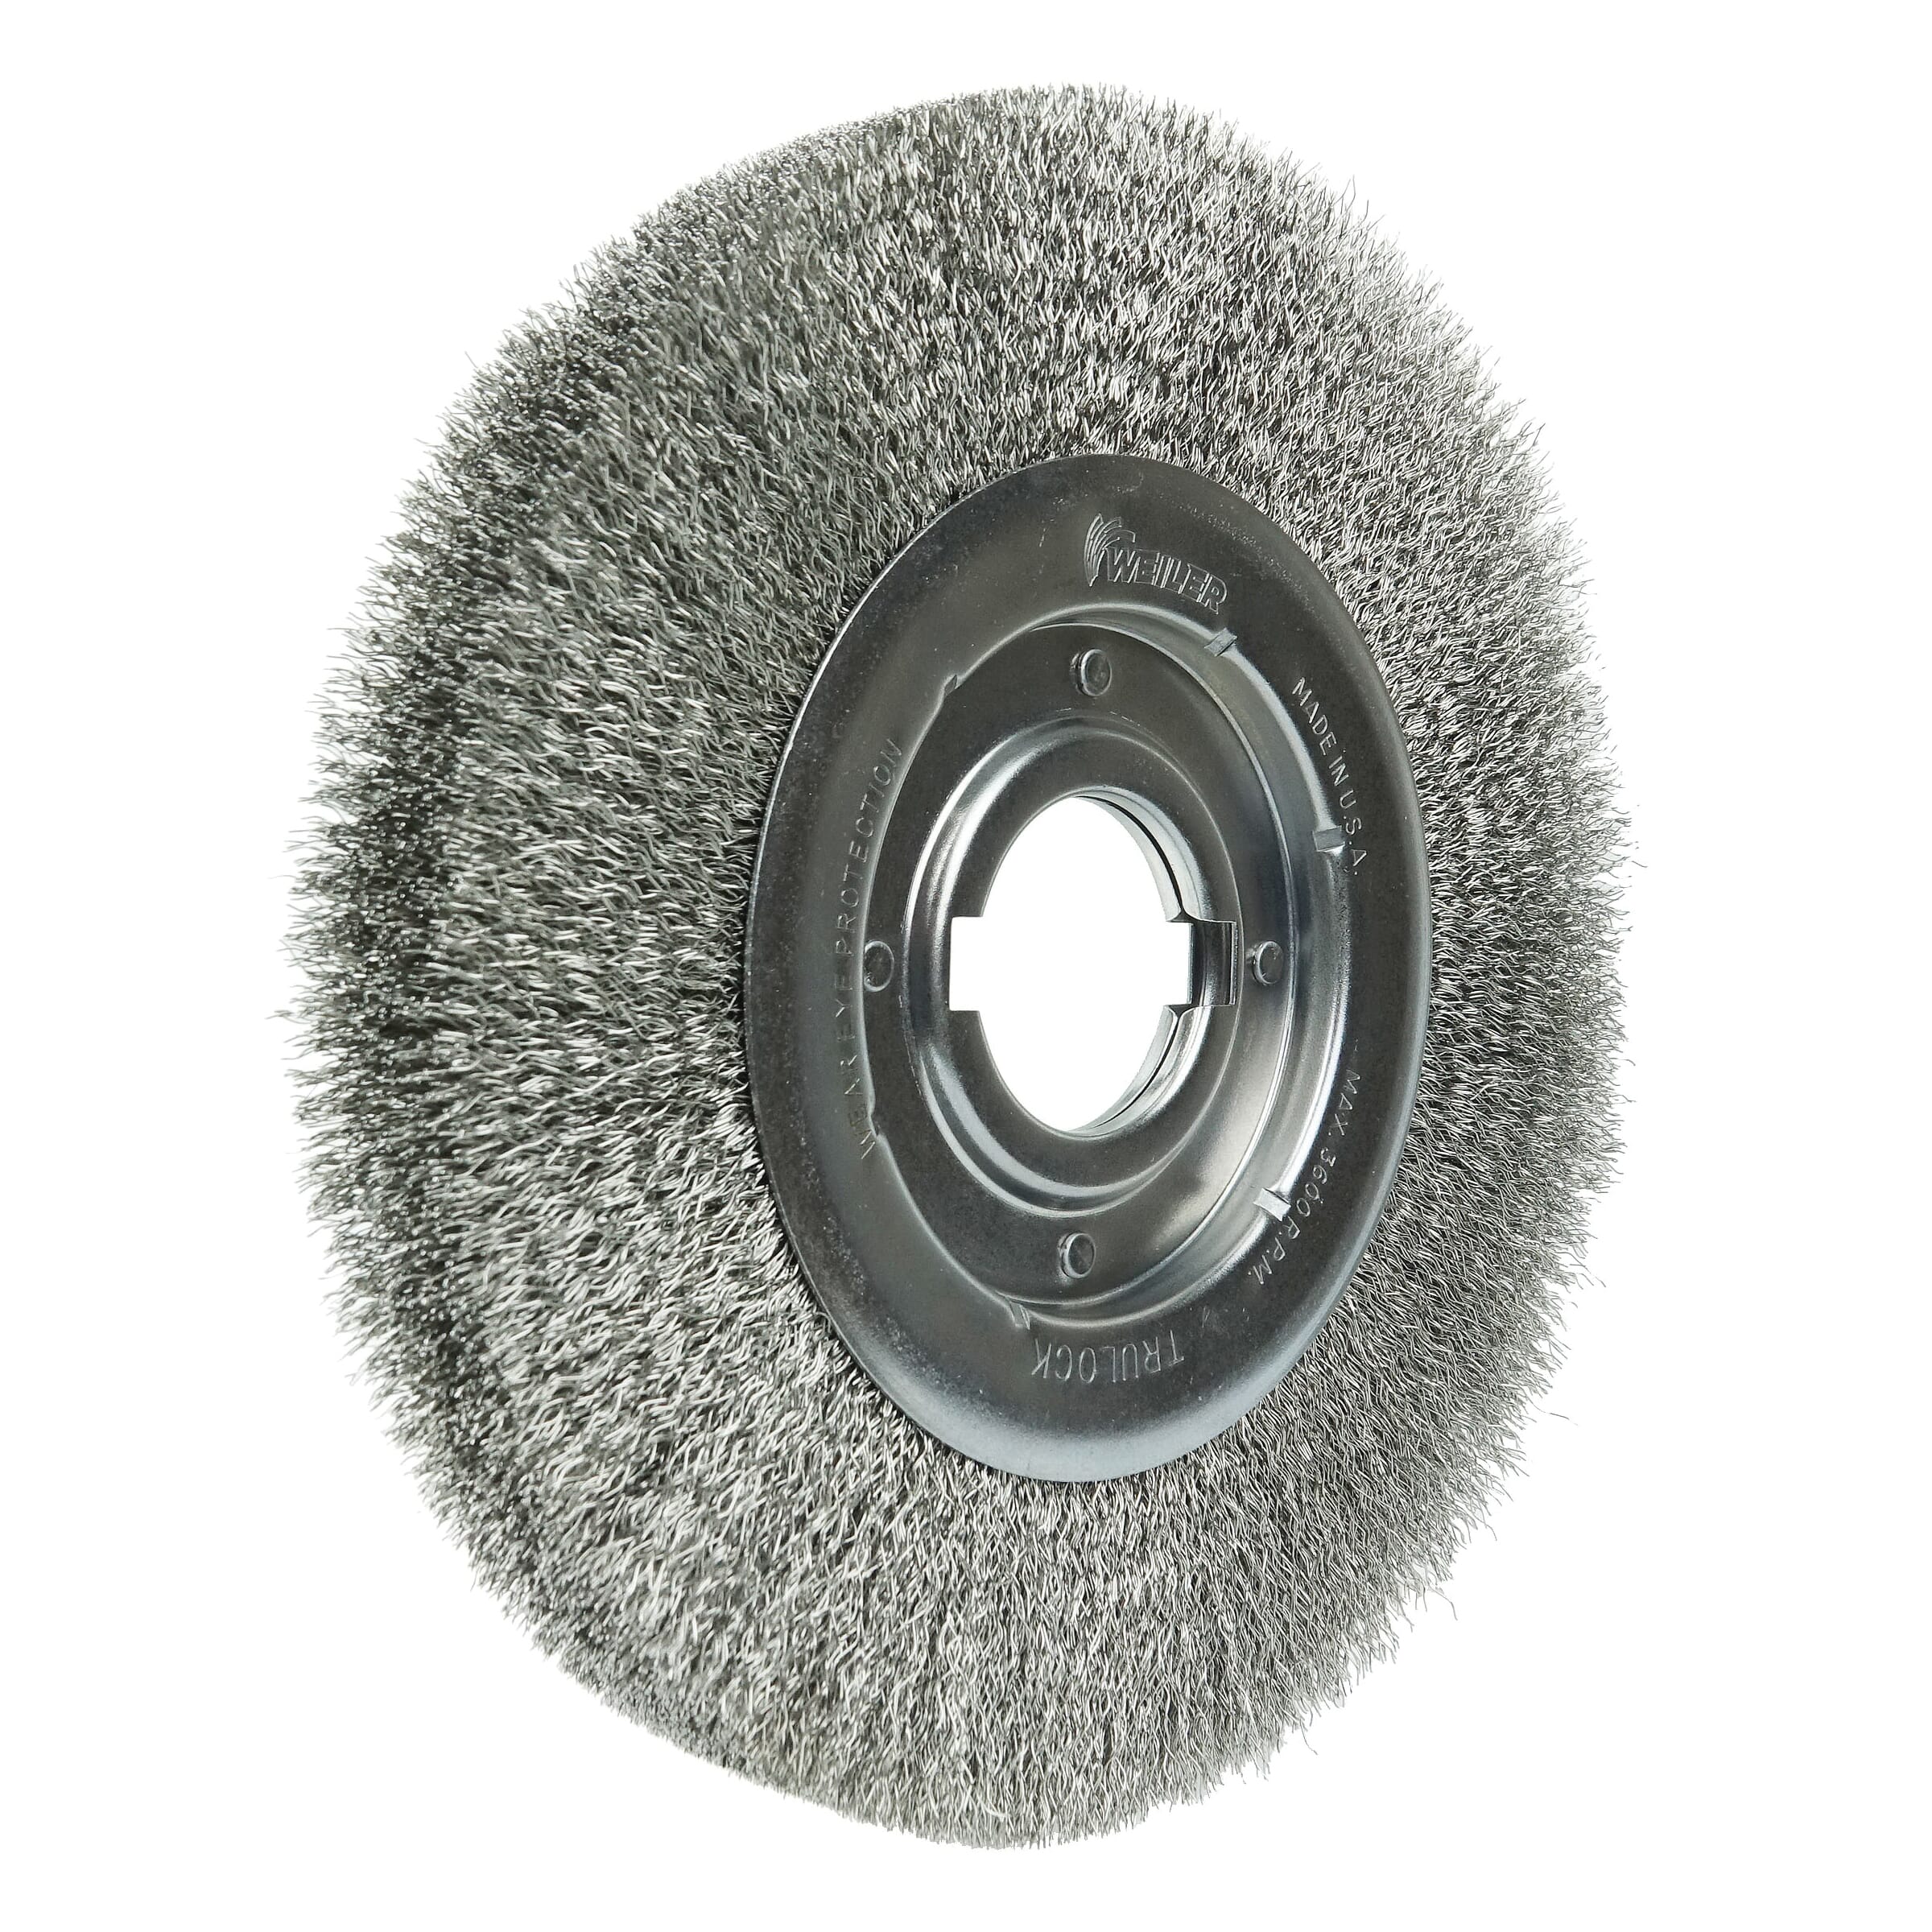 Weiler® 06530 Medium Face Wheel Brush, 10 in Dia Brush, 1-1/8 in W Face, 0.0118 in Dia Crimped Filament/Wire, 2 in Arbor Hole